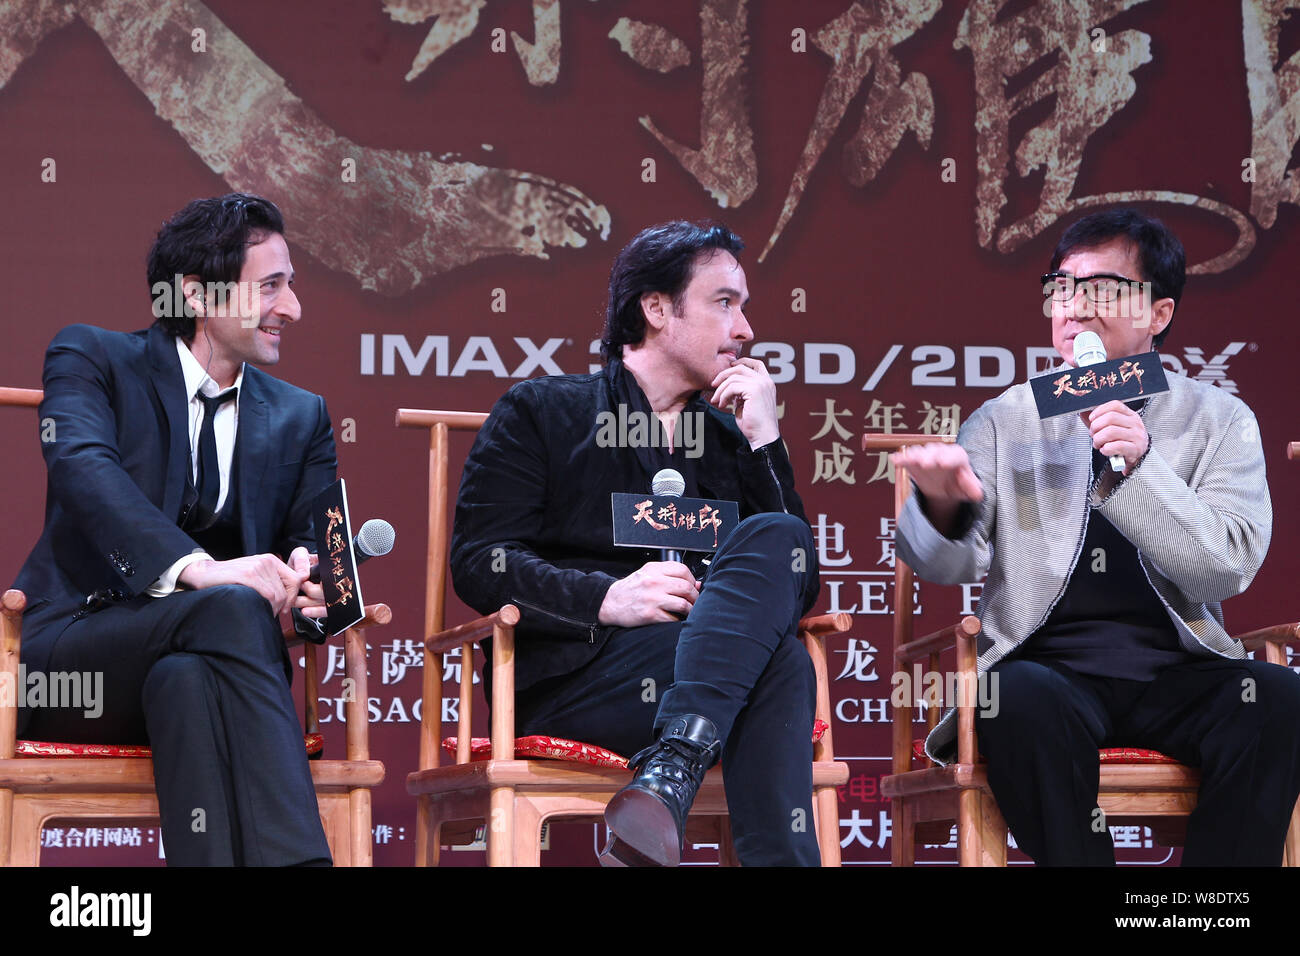 Dragon Blade (2015 Movie – Jackie Chan, John Cusack, Adrien Brody